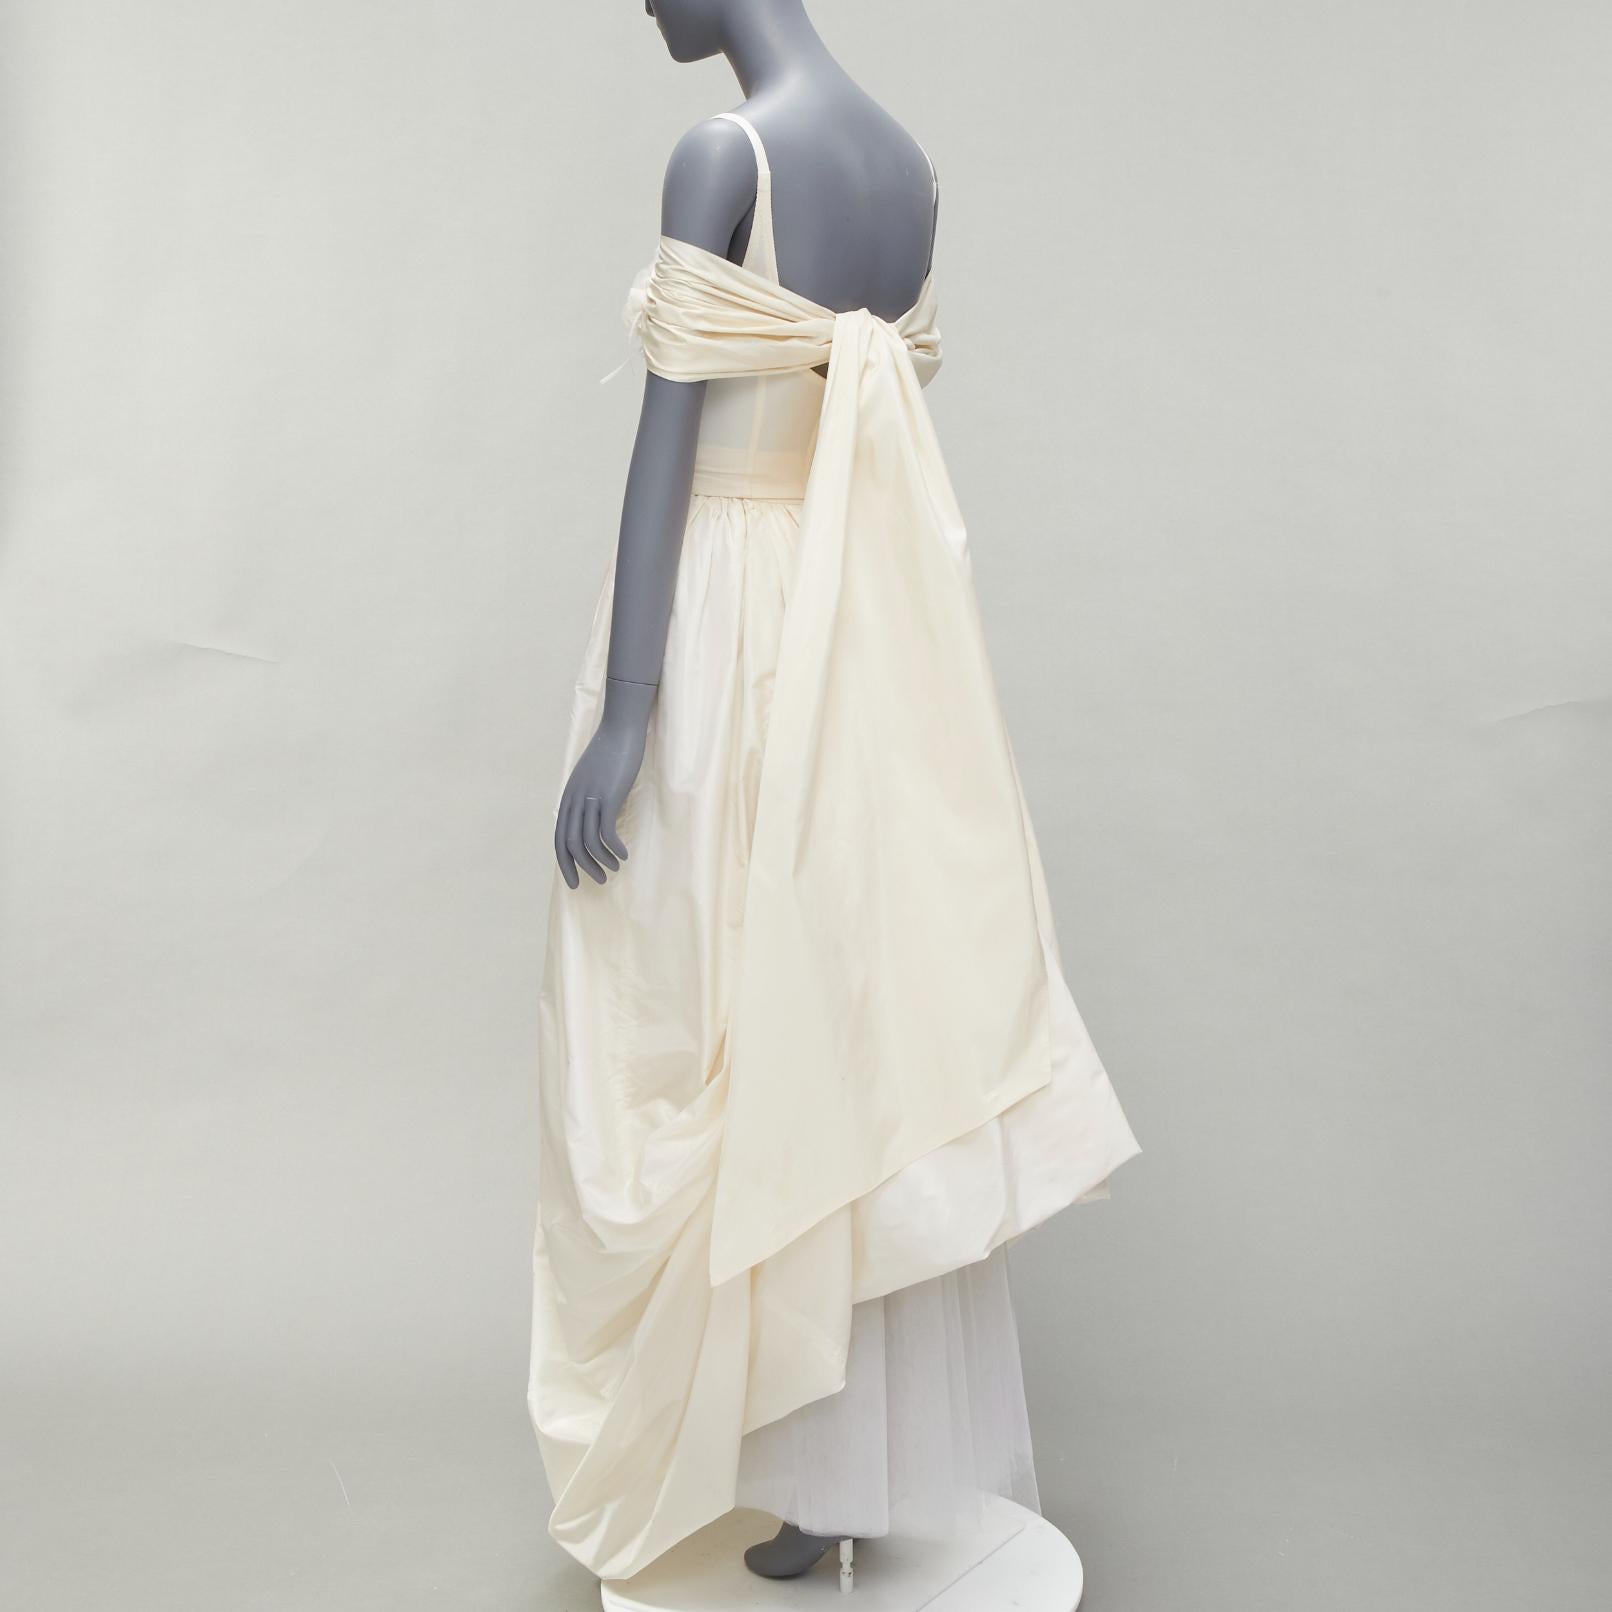 Women's DOLCE GABBANA 1990s Vintage corset bustier tulle skirt 2 piece bridal dress IT38 For Sale